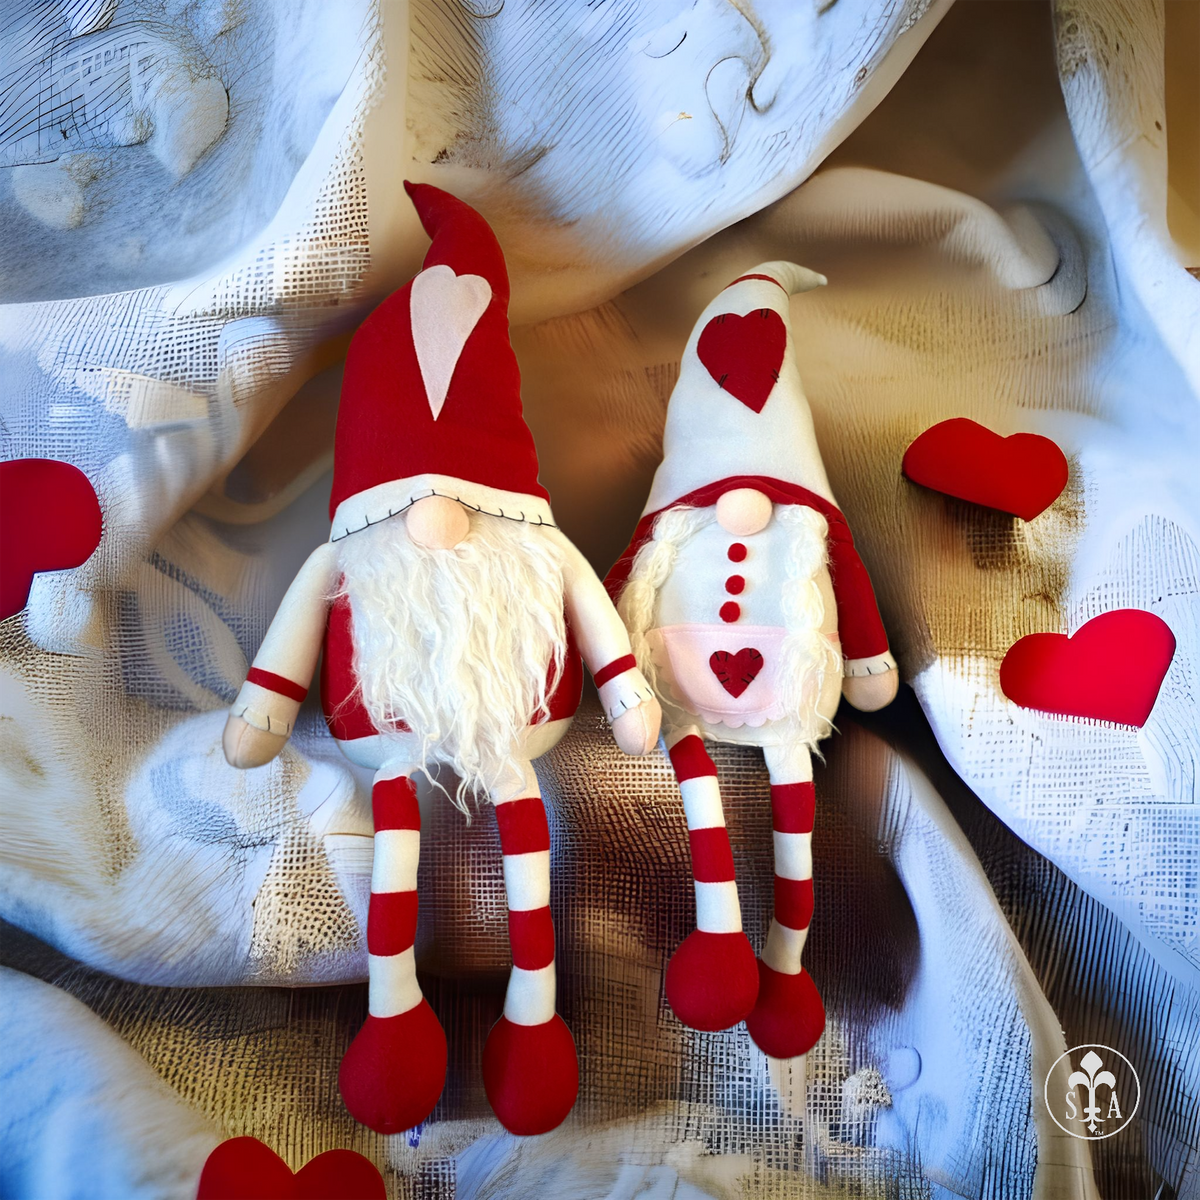 Valentine's Day Gnomes (Sold Separately)